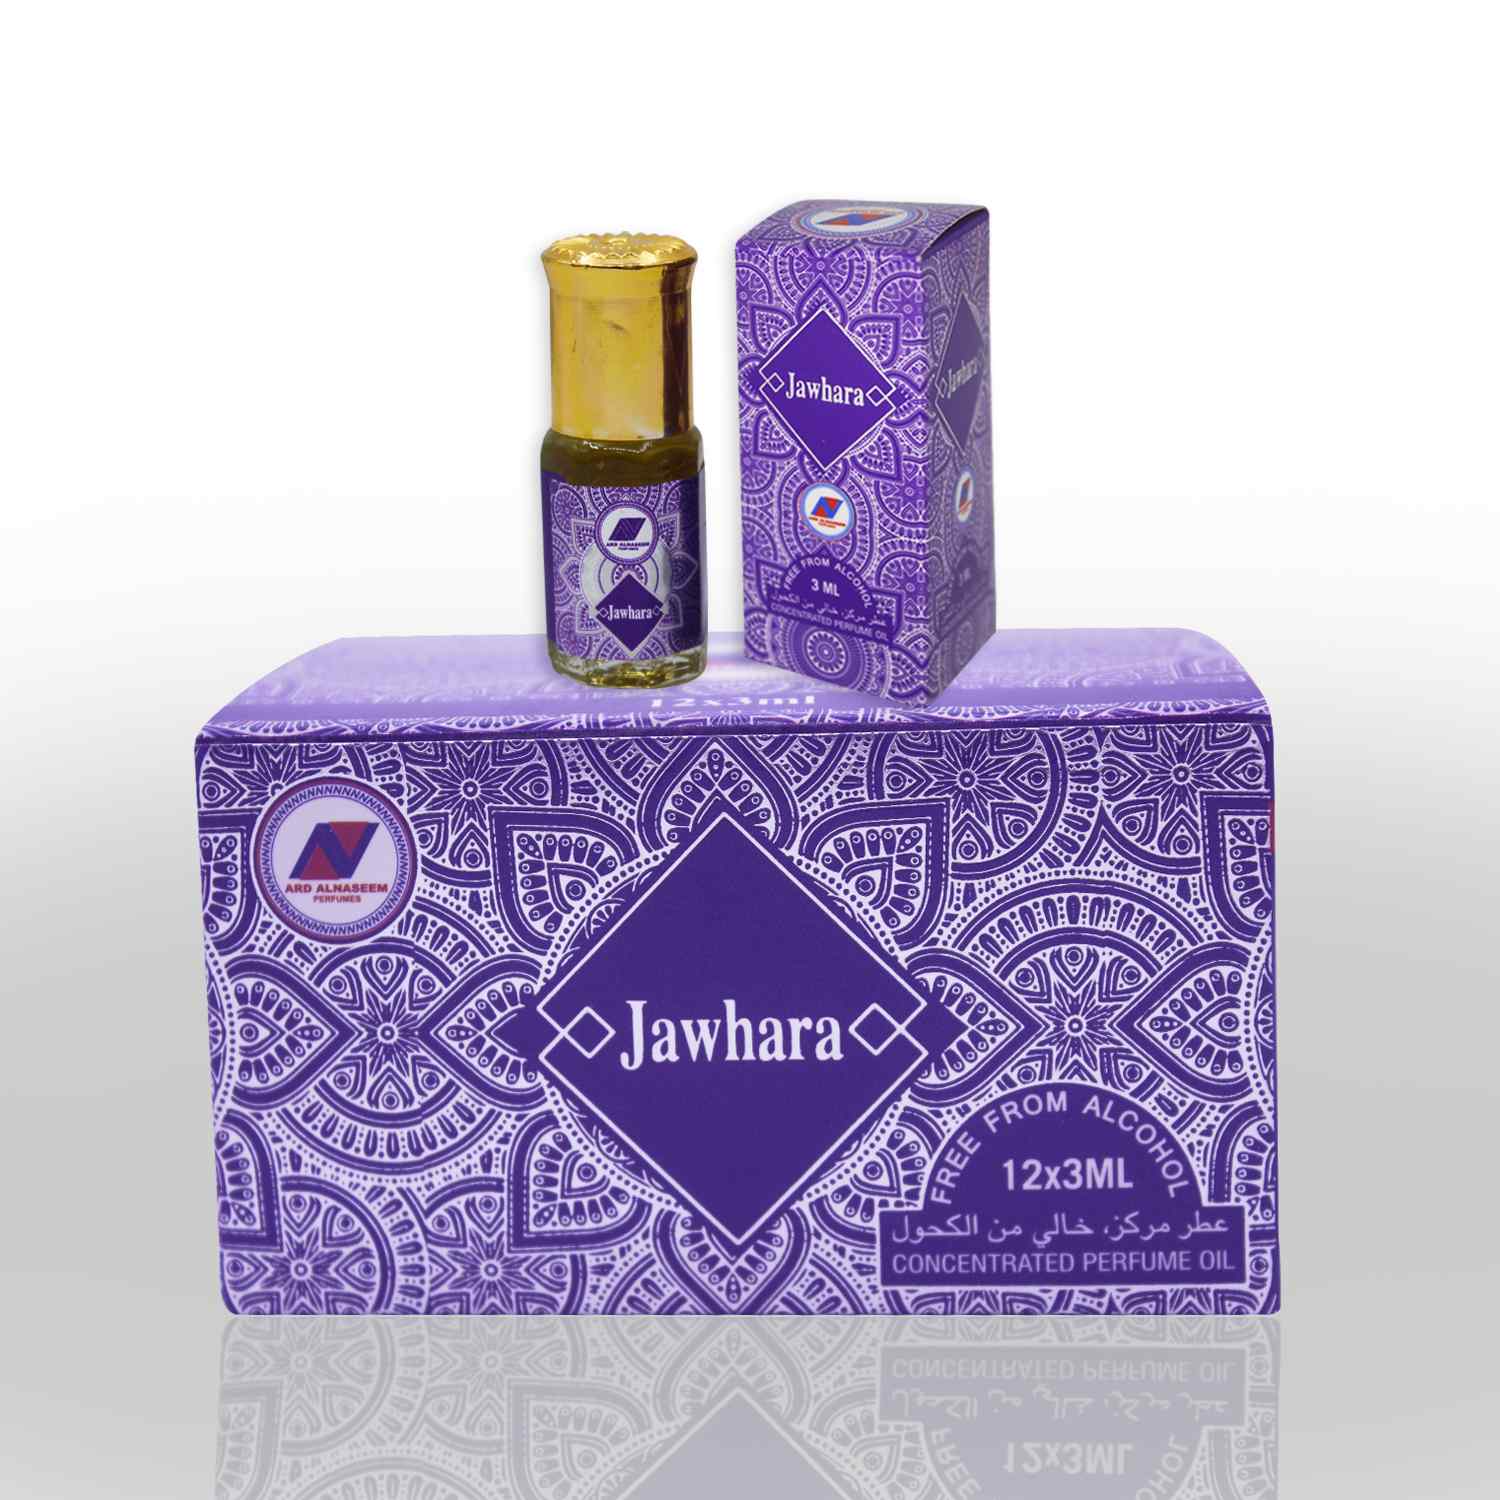 Jawhara-3ml-Rollan-Attar-by-ARD-perfumes